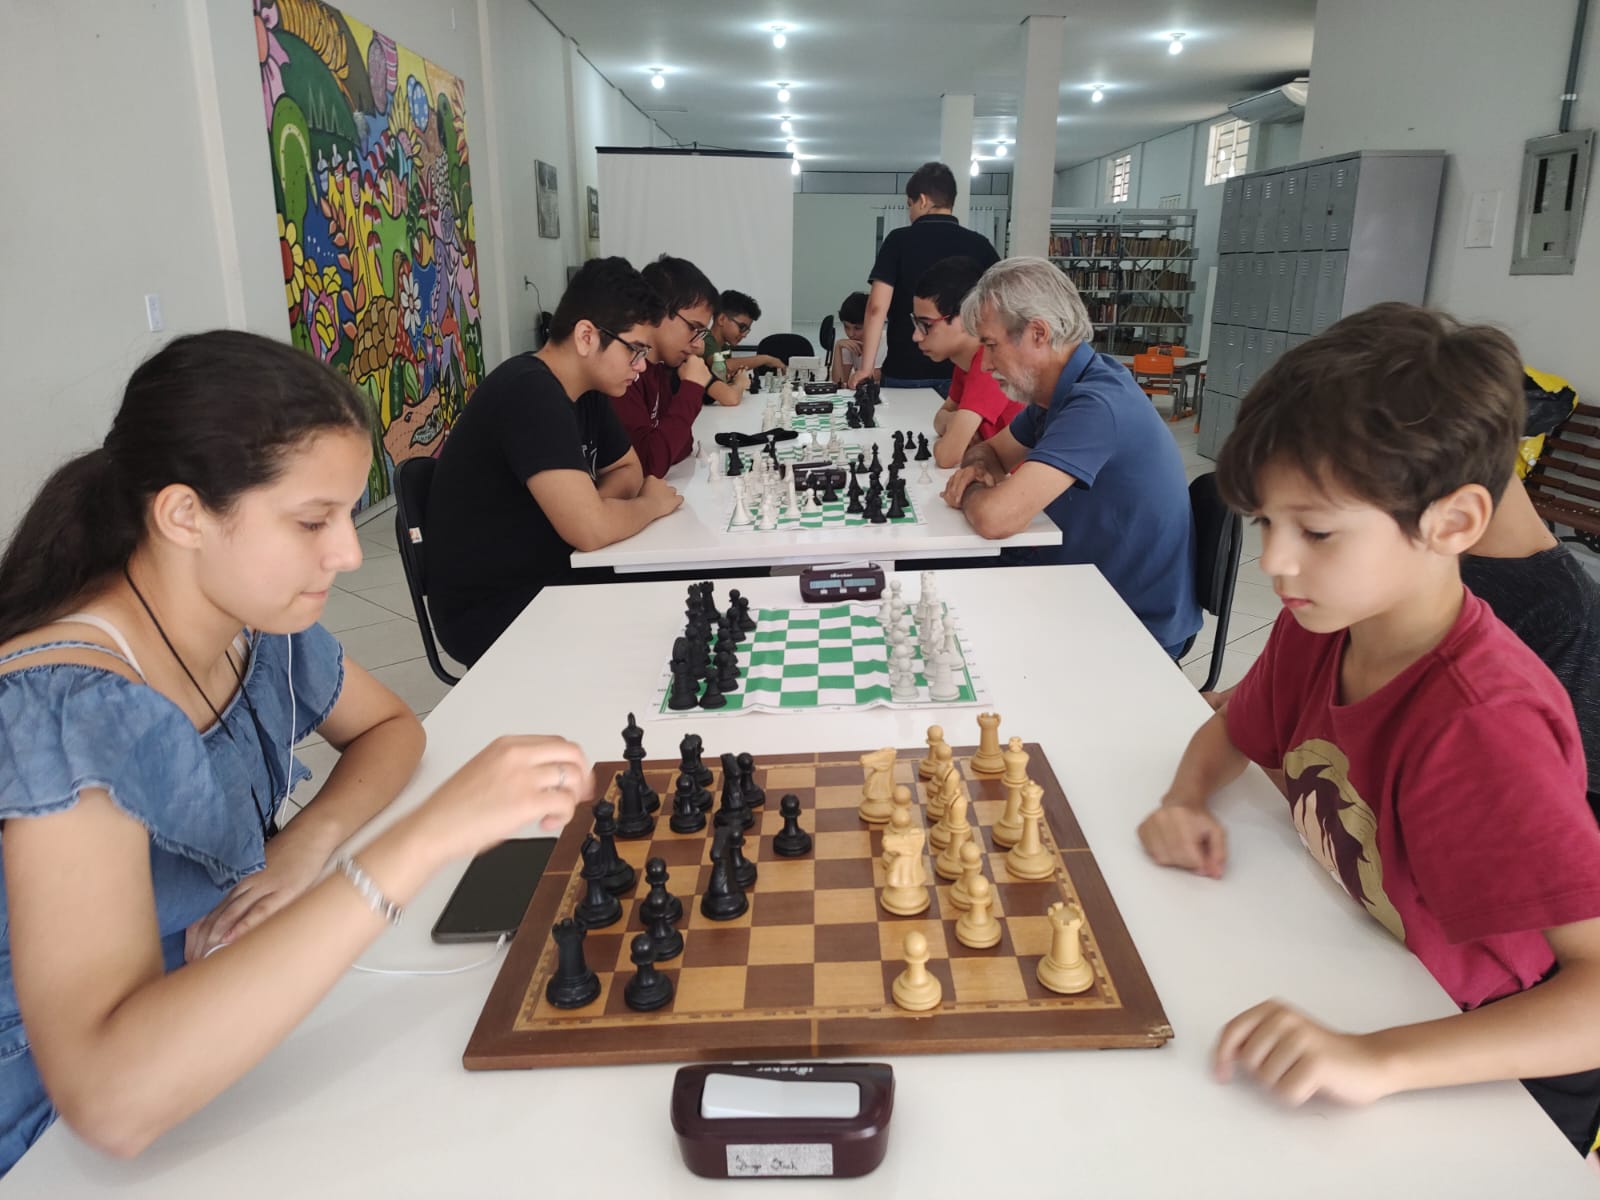 Grátis: Biblioteca Vidal Ramos inicia aulas de xadrez - Portal